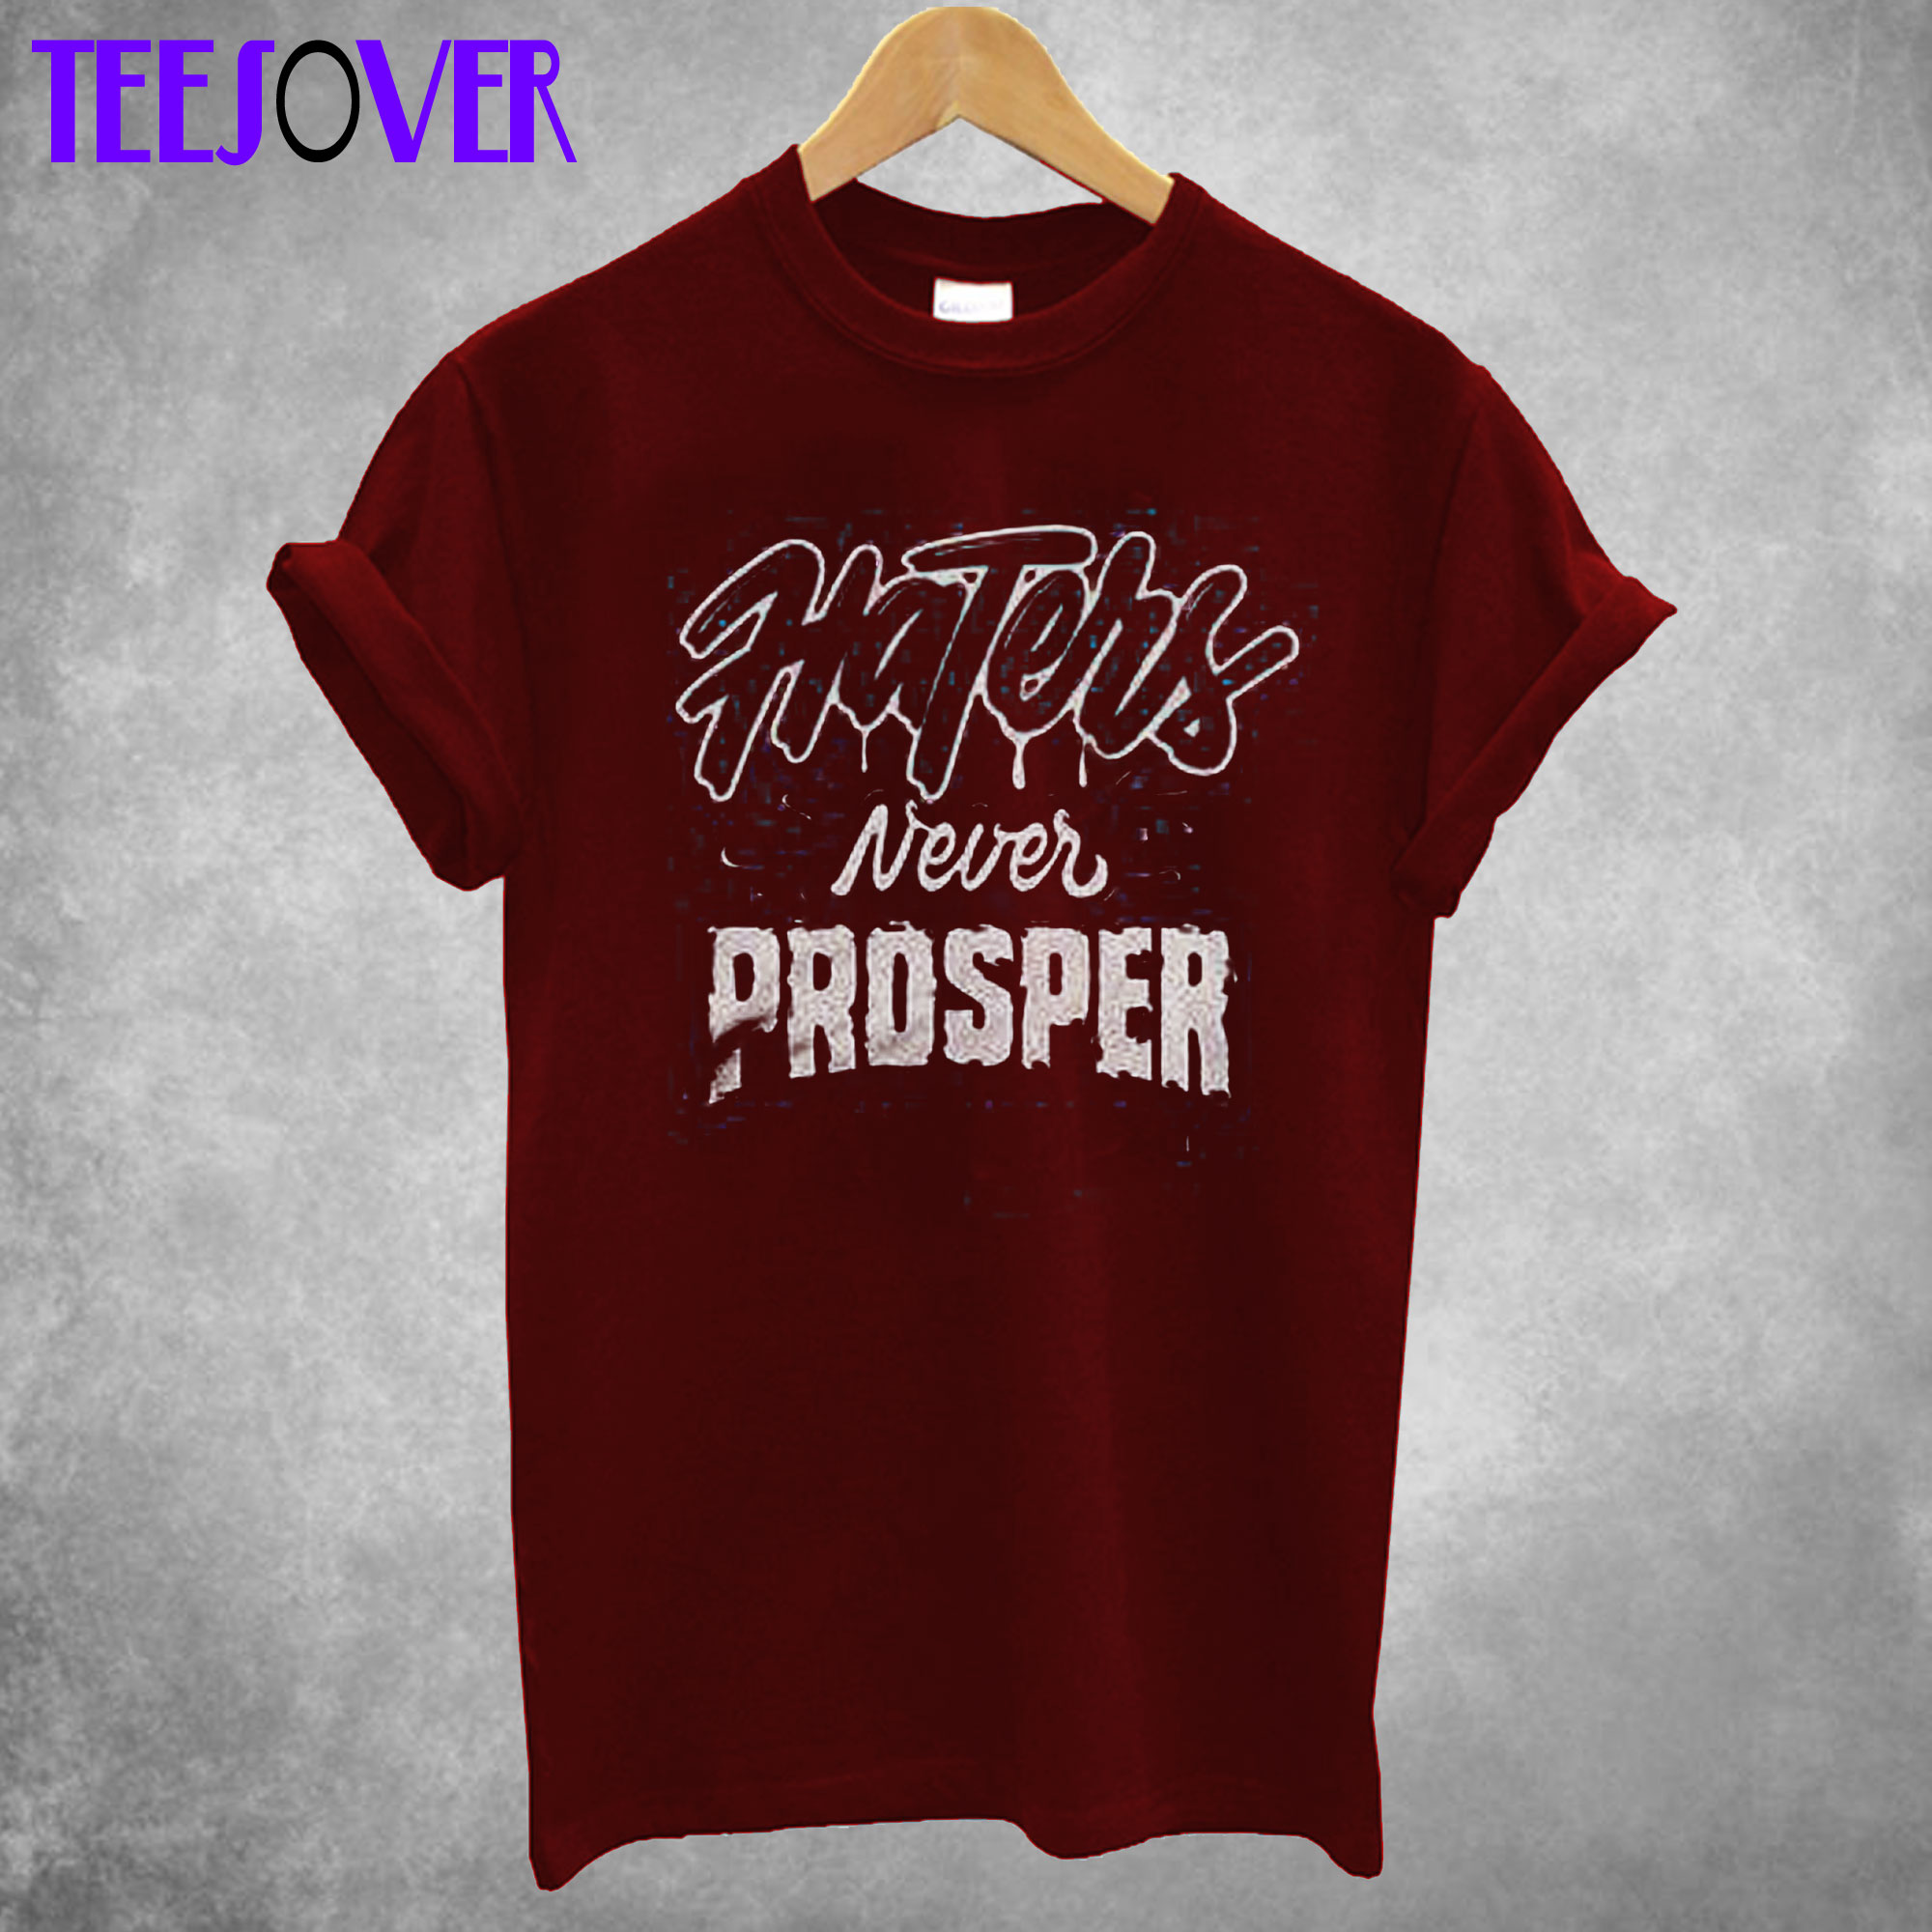 Haters Never Prosper T Shirt